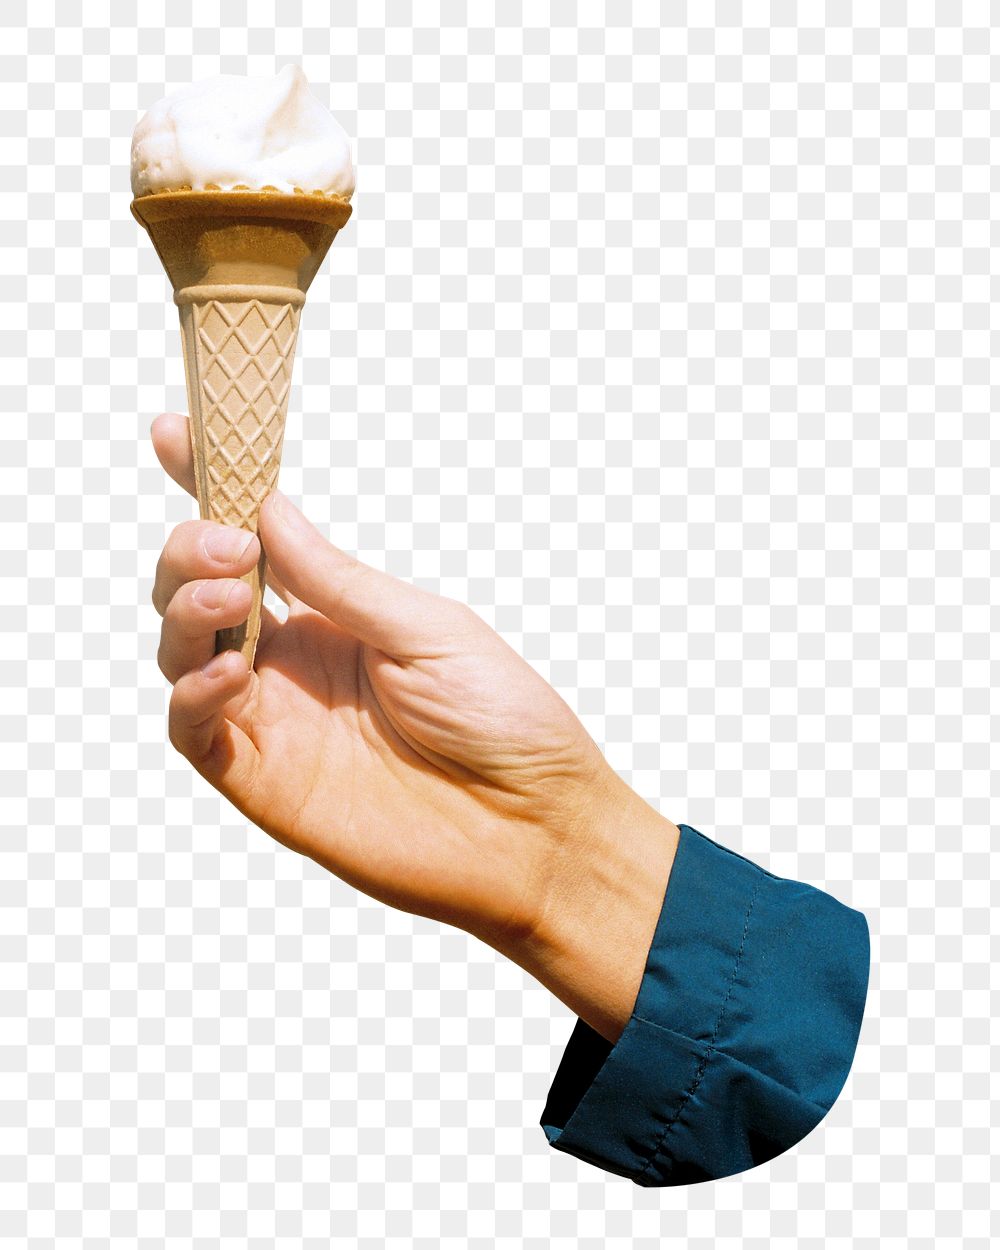 Ice-cream cone png sticker, transparent background 